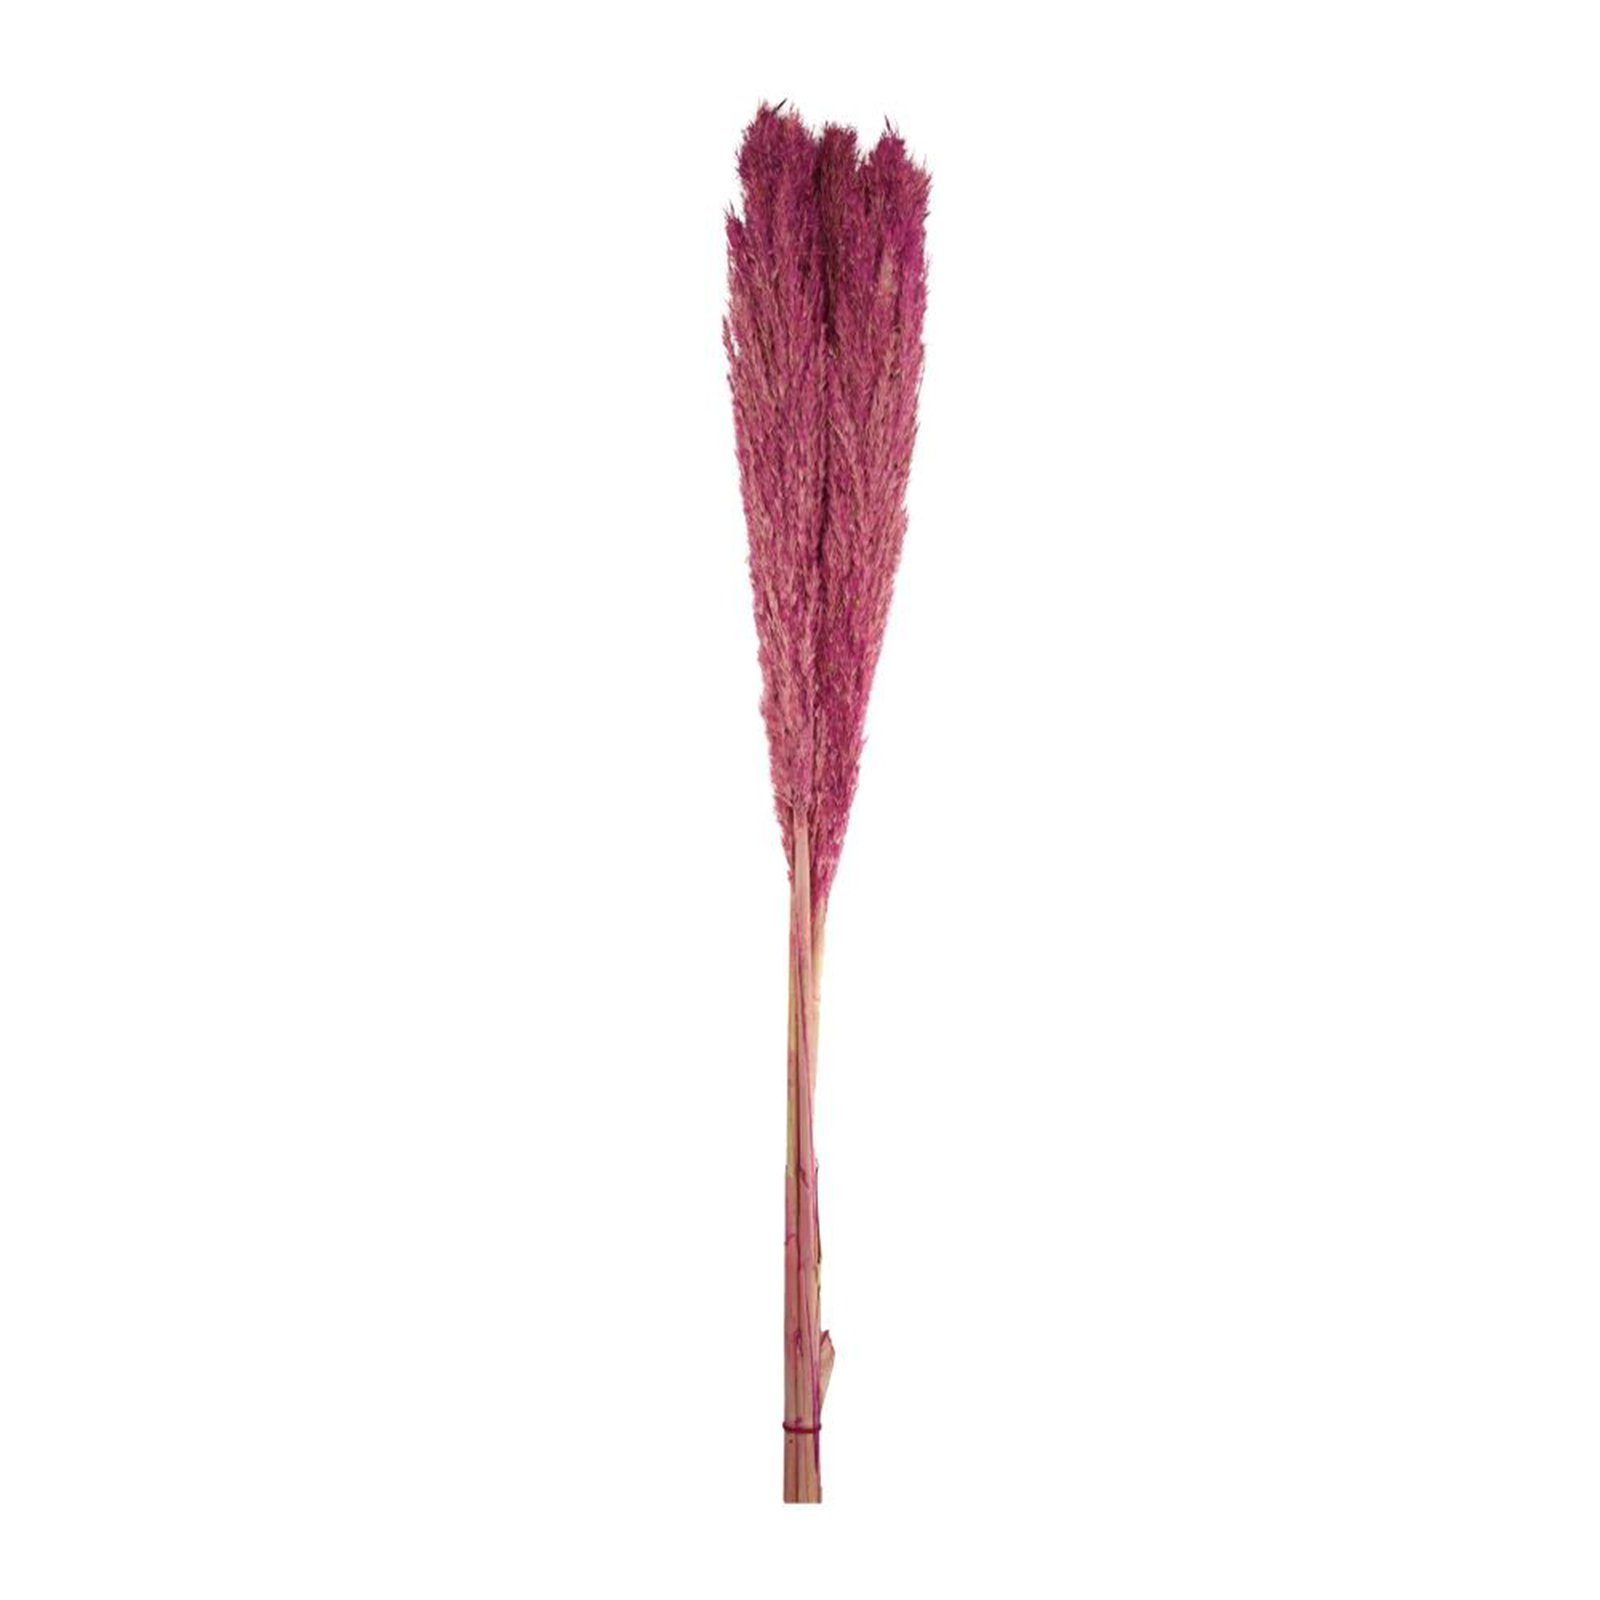 Trockenblume Pfahlrohr pink - Wild reed plume - Arundo donax - 115 cm - 3 Stück, DIJK | Trockenblumen